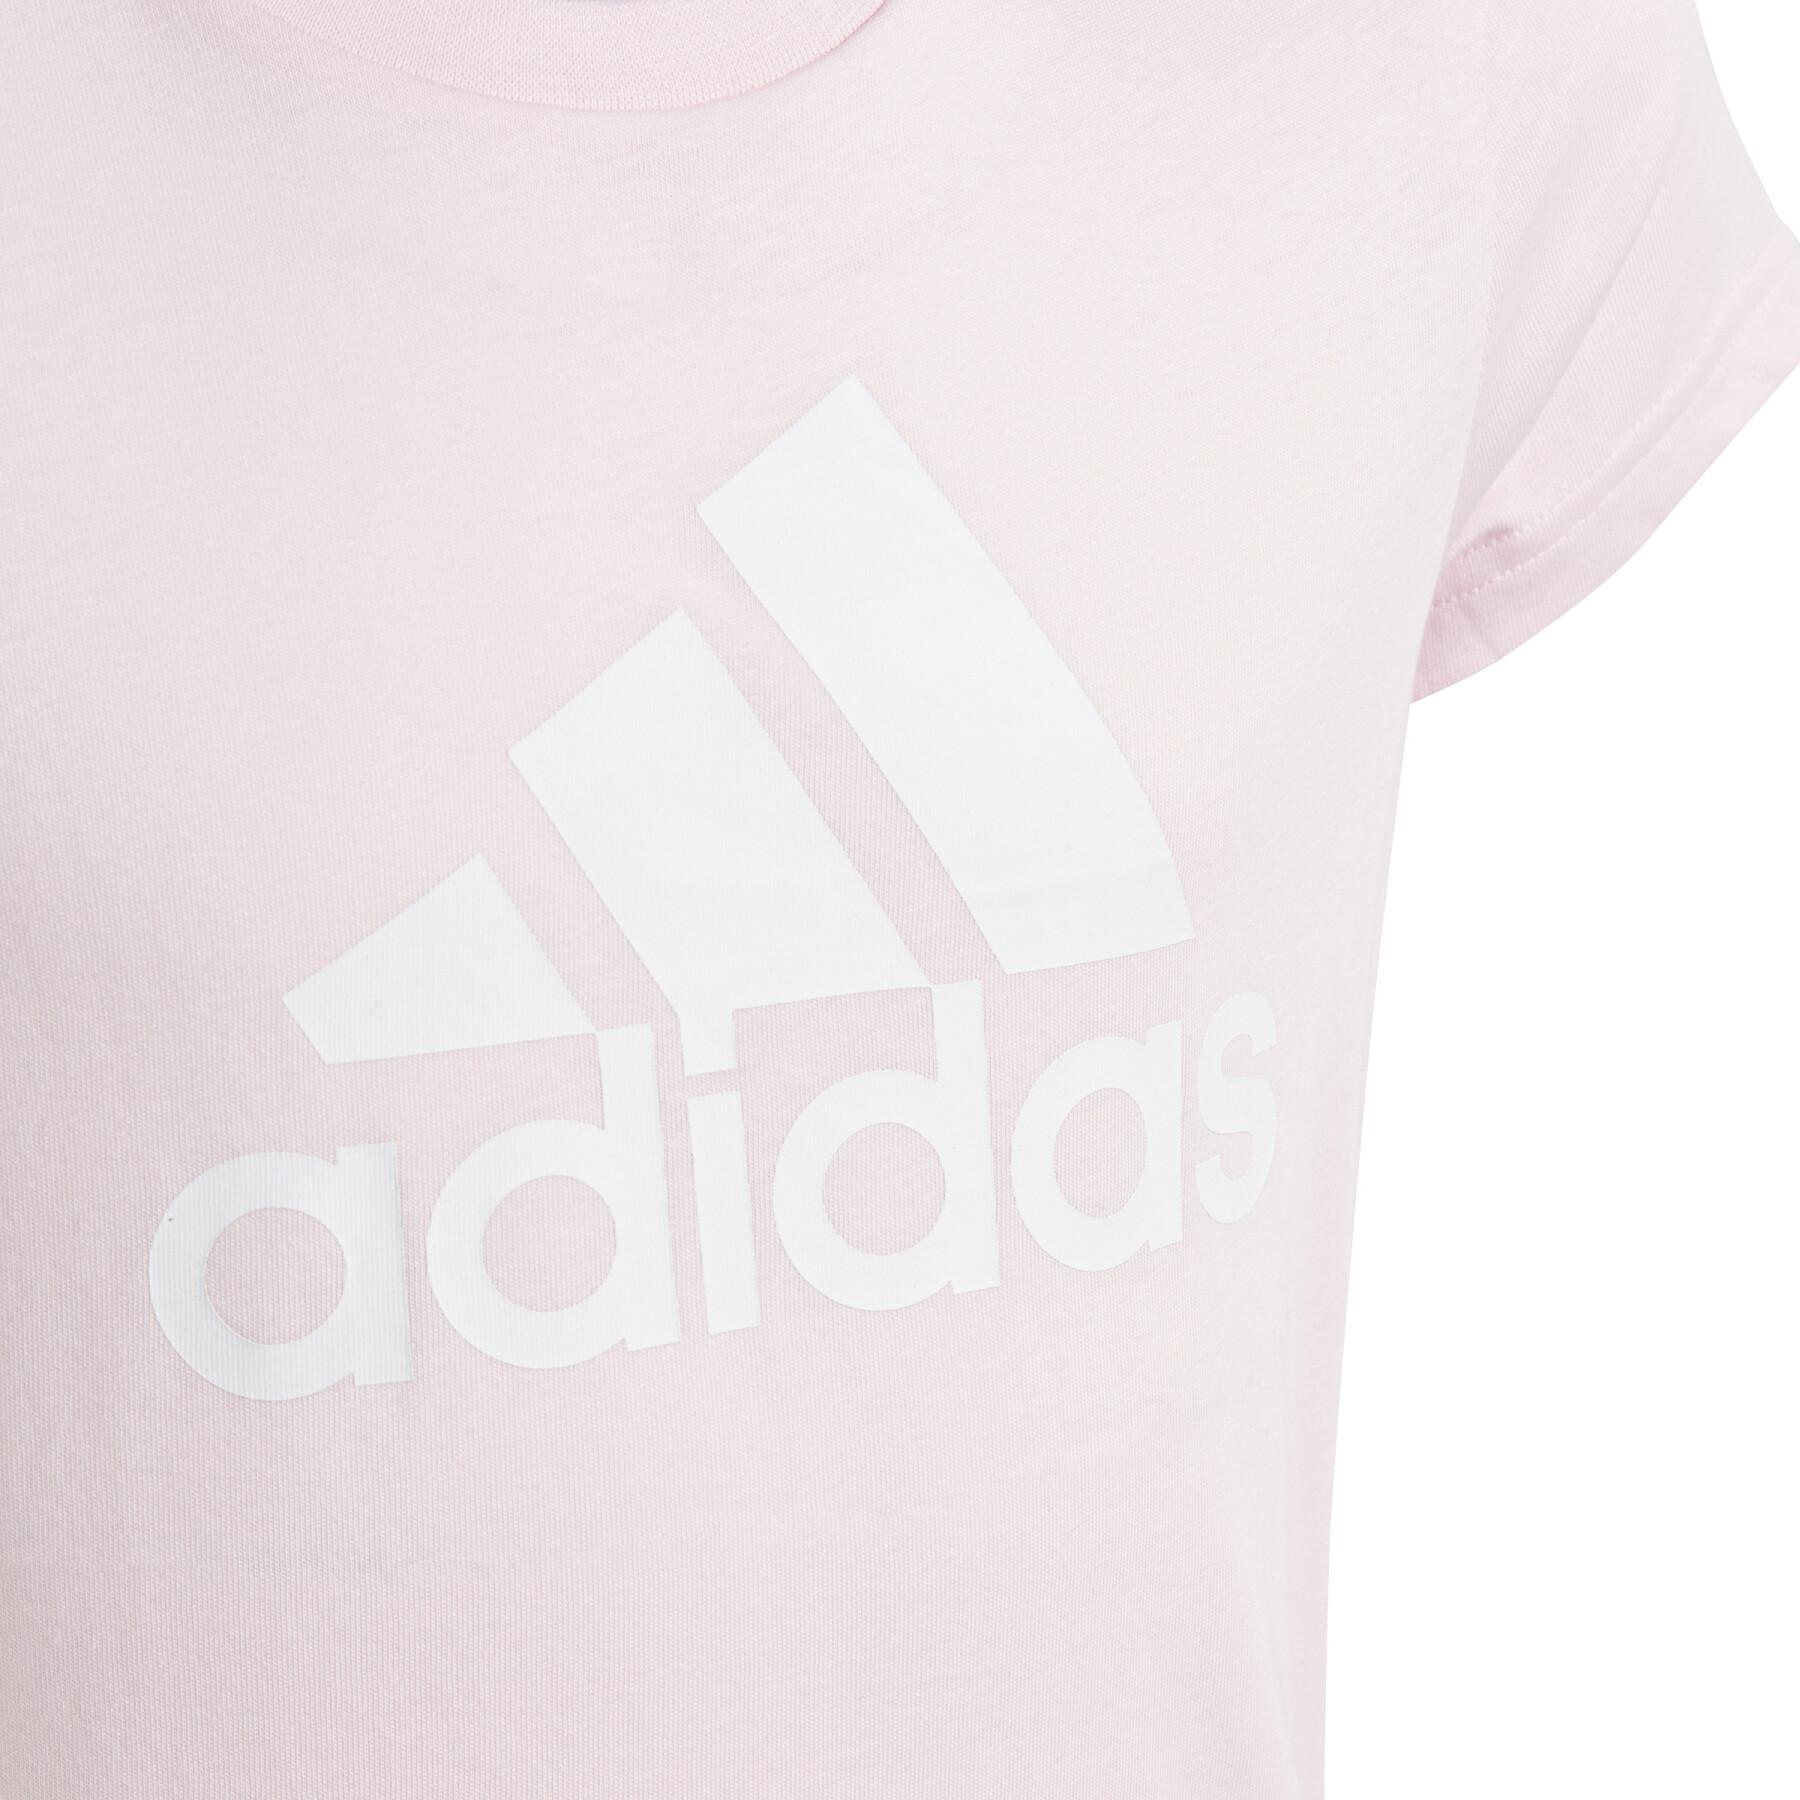 T-shirt katoen groot logo meisje adidas Essentials